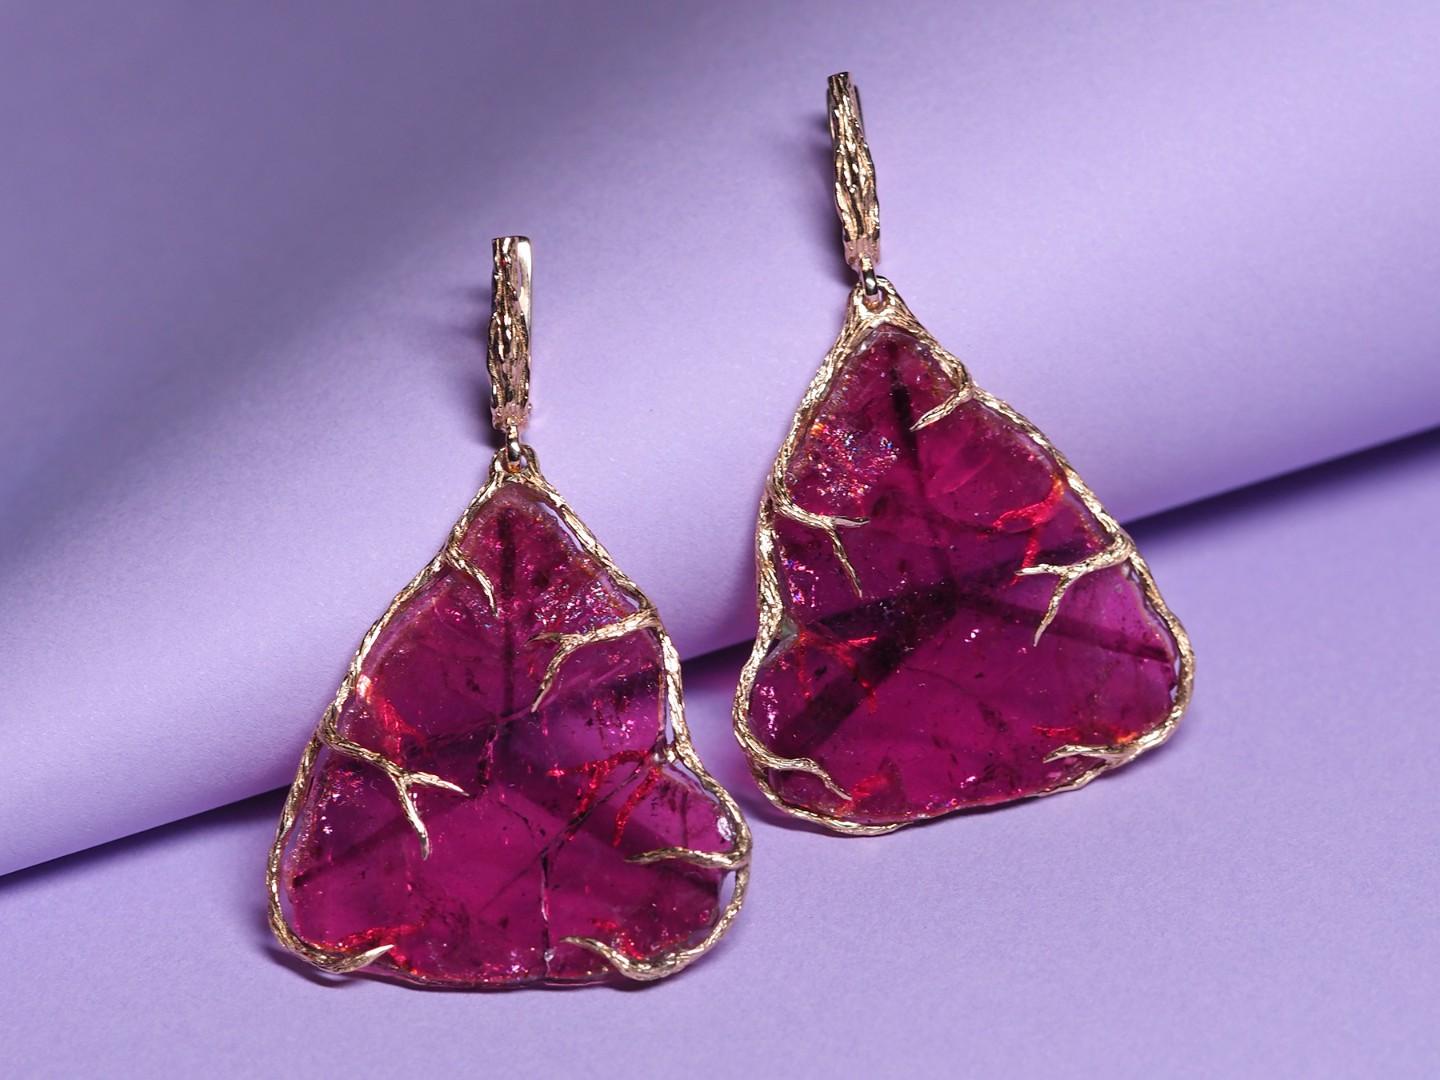 Uncut Large Tourmaline Gold Earrings Fuchsia Pink Gemstone Crystal Art Deco Jewelry